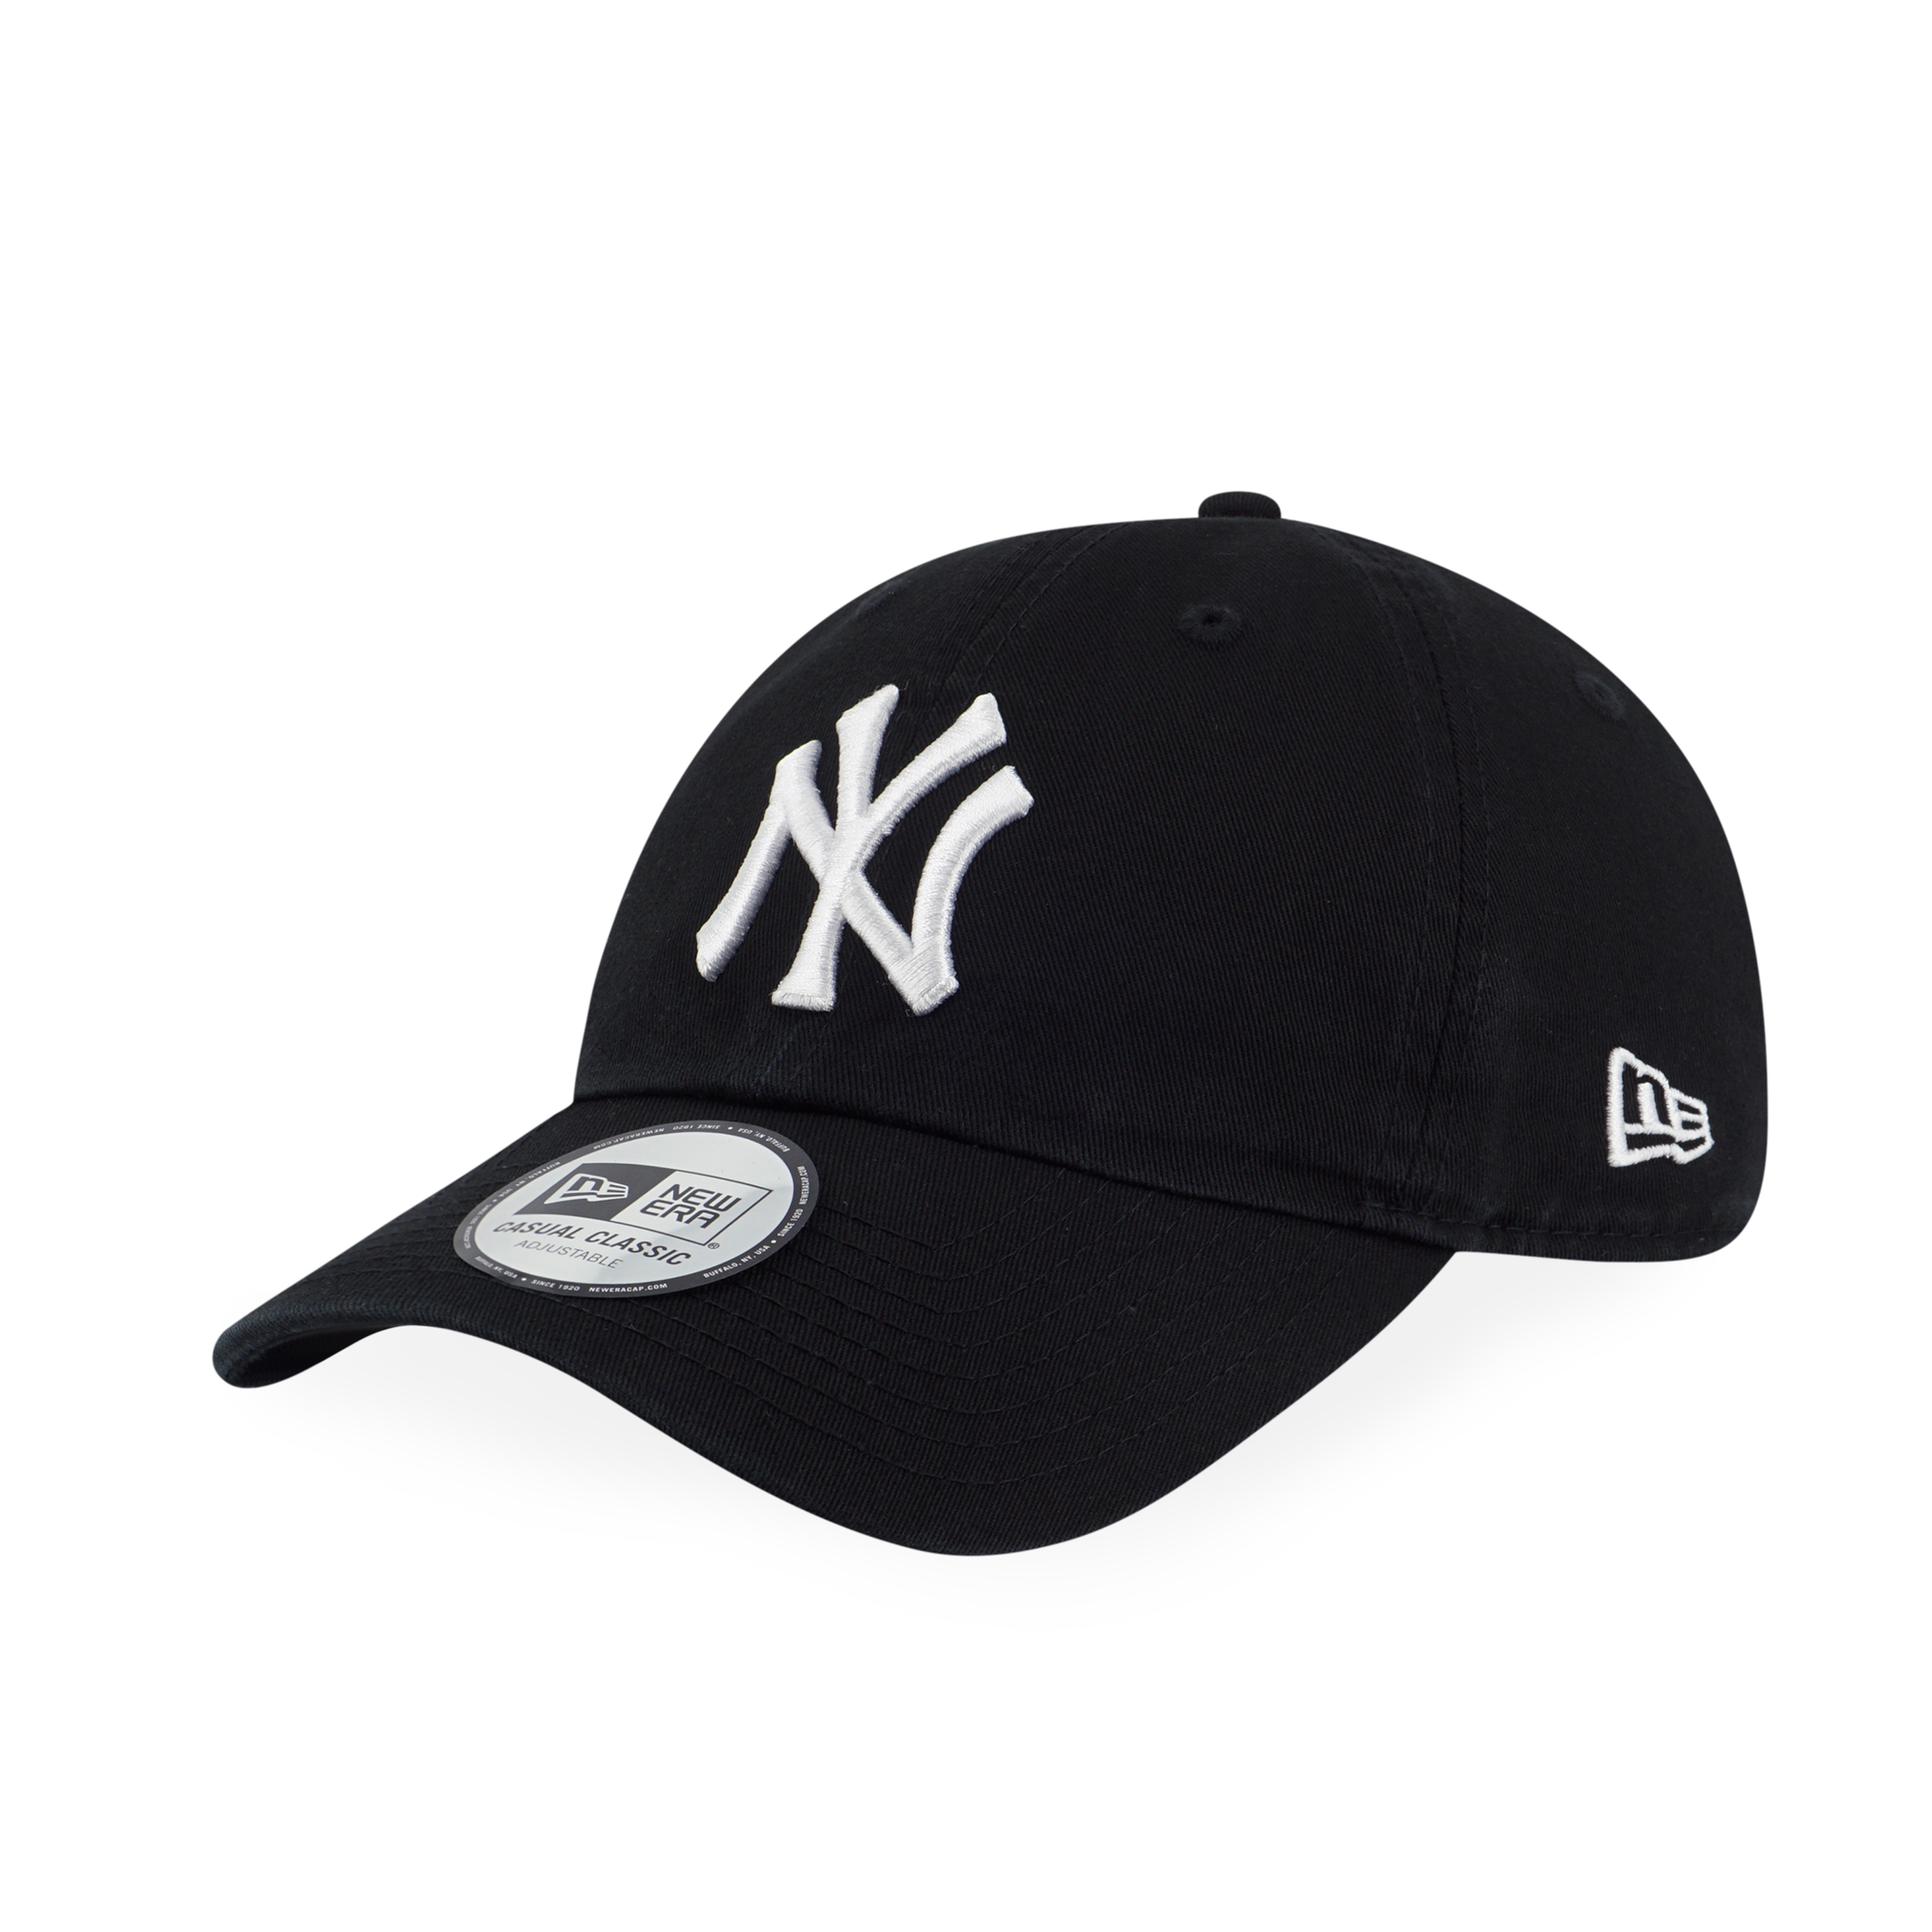 NEW YORK YANKEES BLACK CASUAL CLASSIC CAP